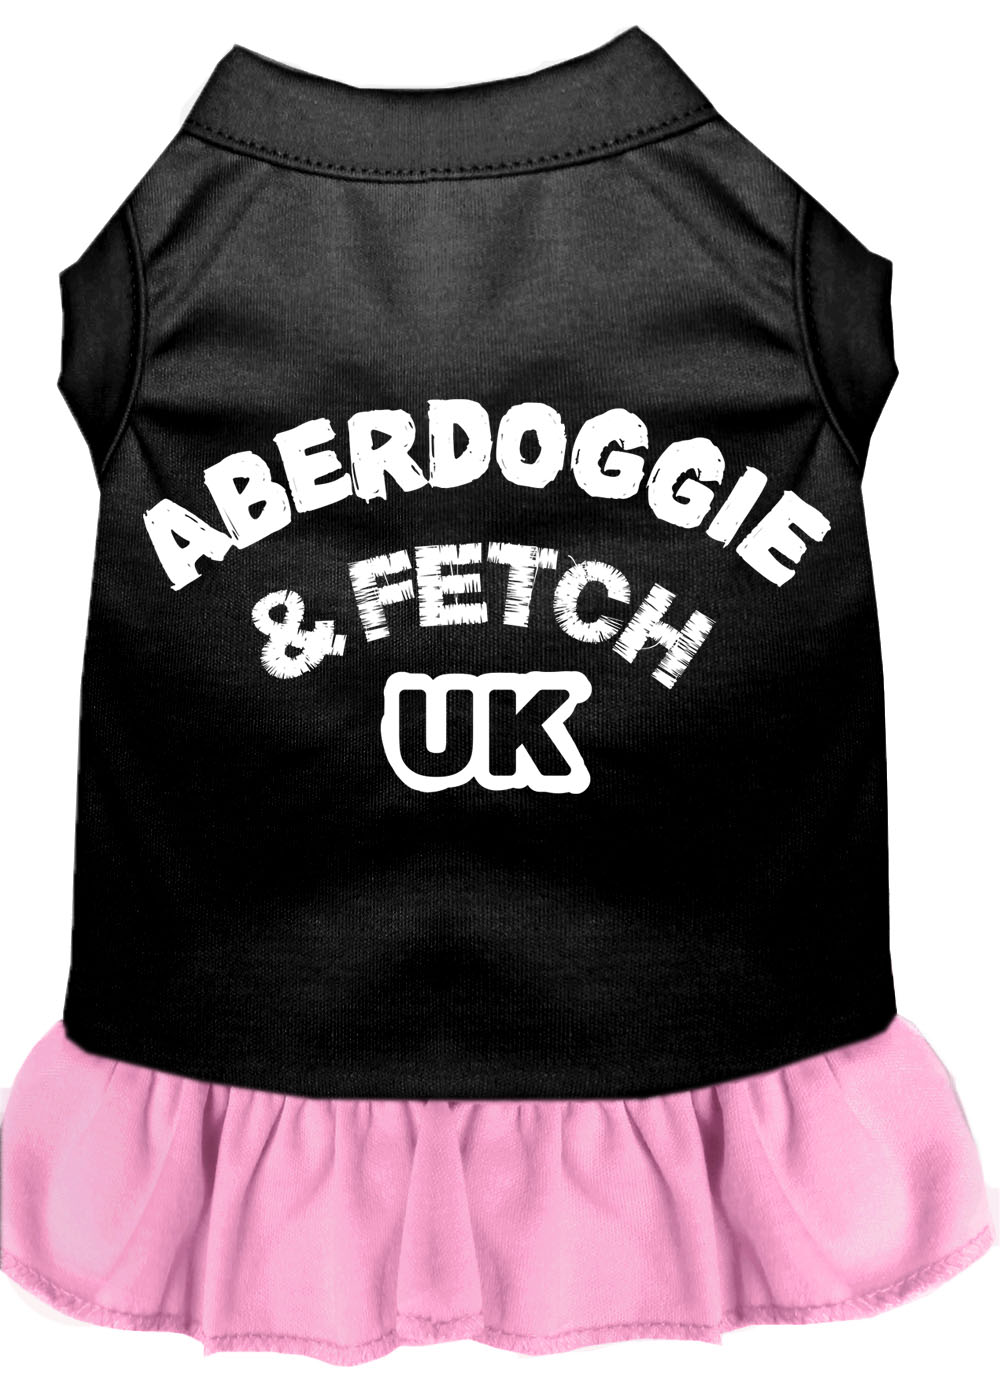 Aberdoggie Uk Screen Print Dog Dress Black With Light Pink Sm GreatEagleInc